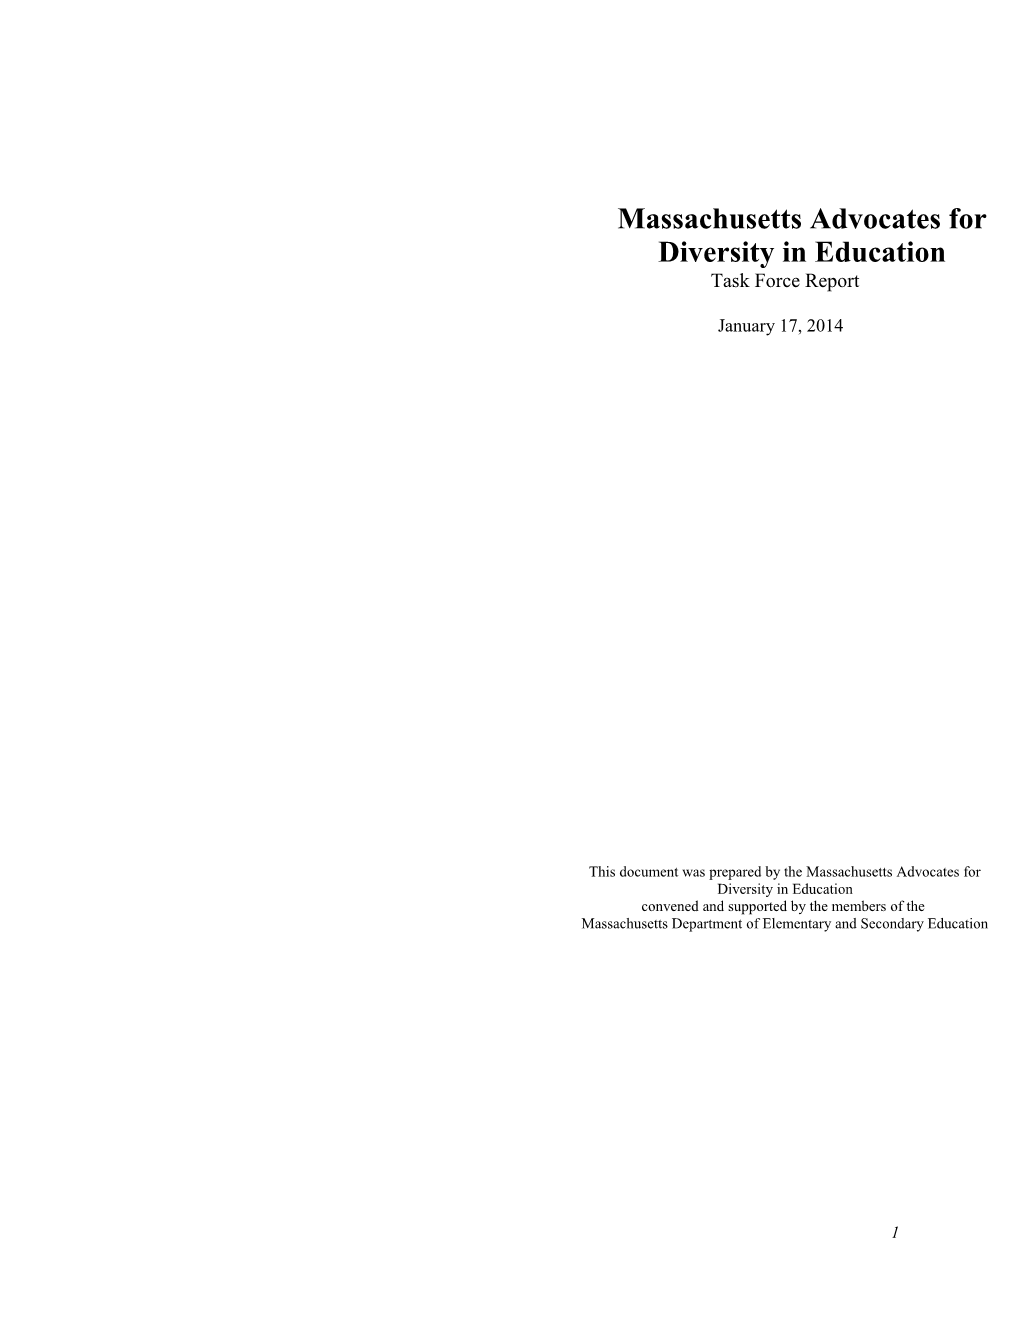 Massachusetts Advocates For Diversity In Education Task Force Report, January 2014